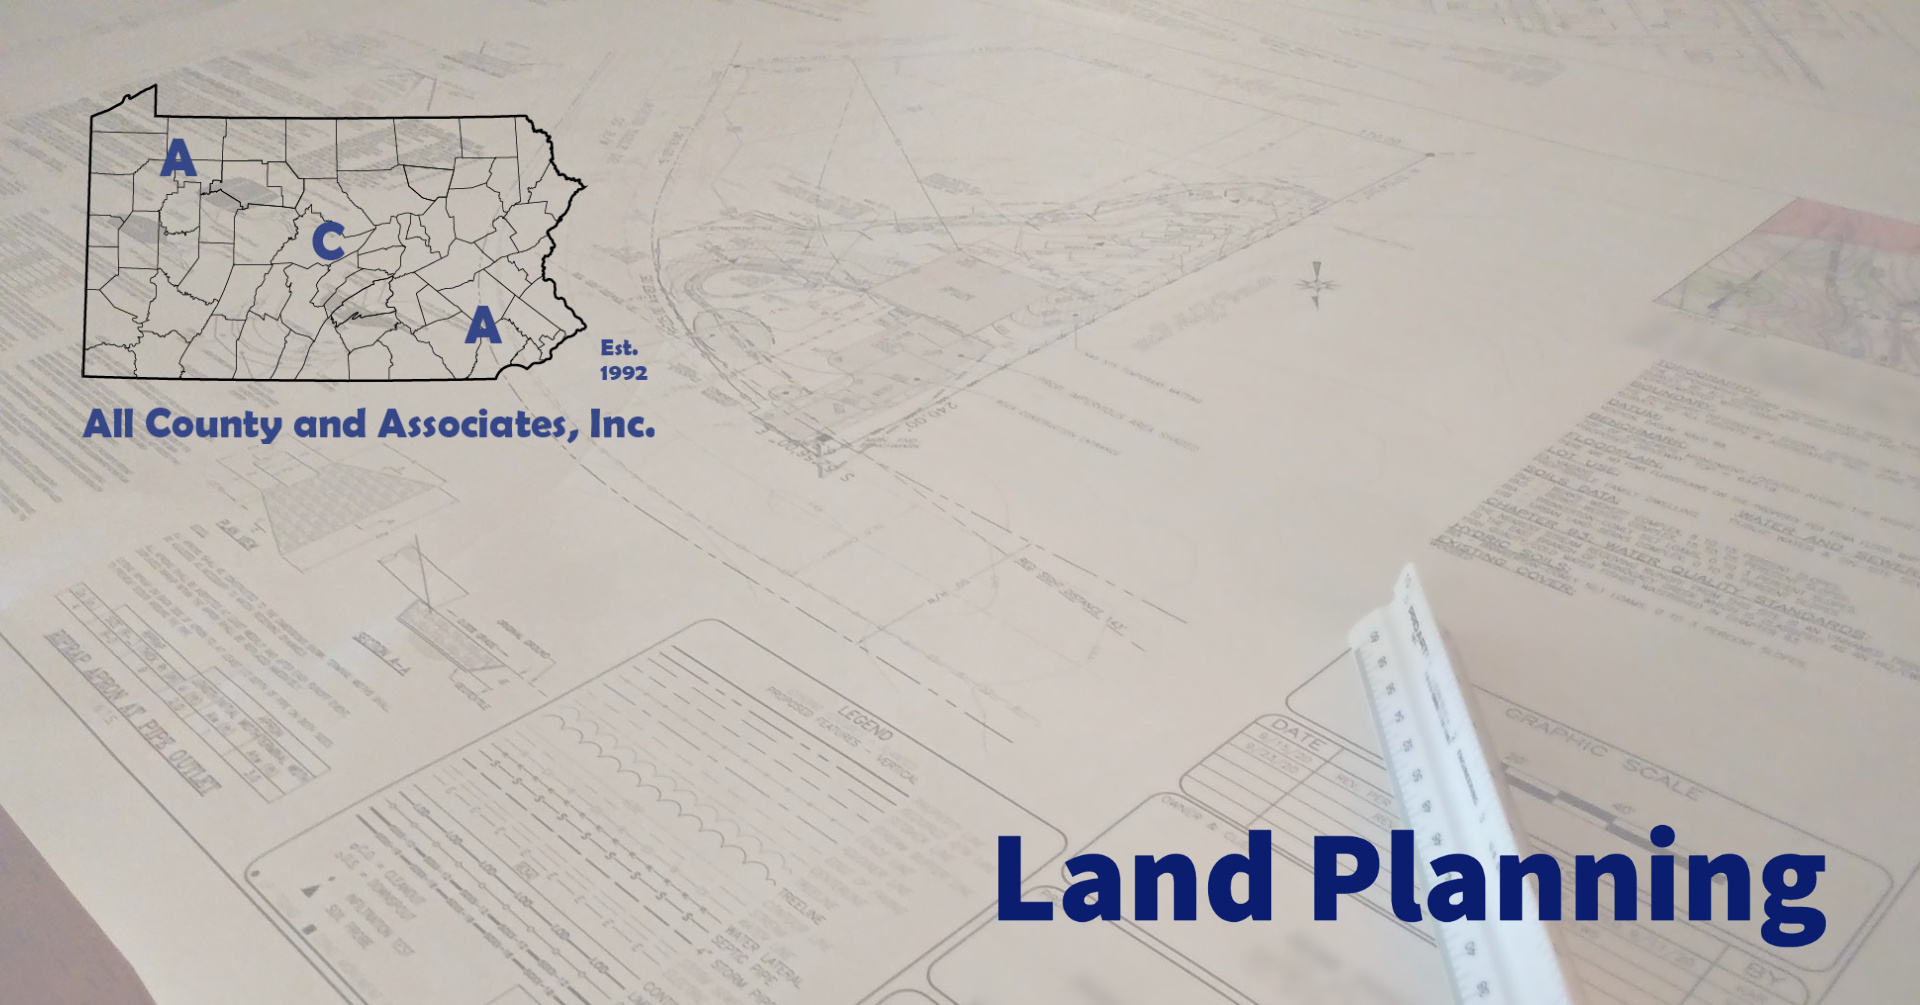 Civil engineering plan, land planning, accessory dwellings